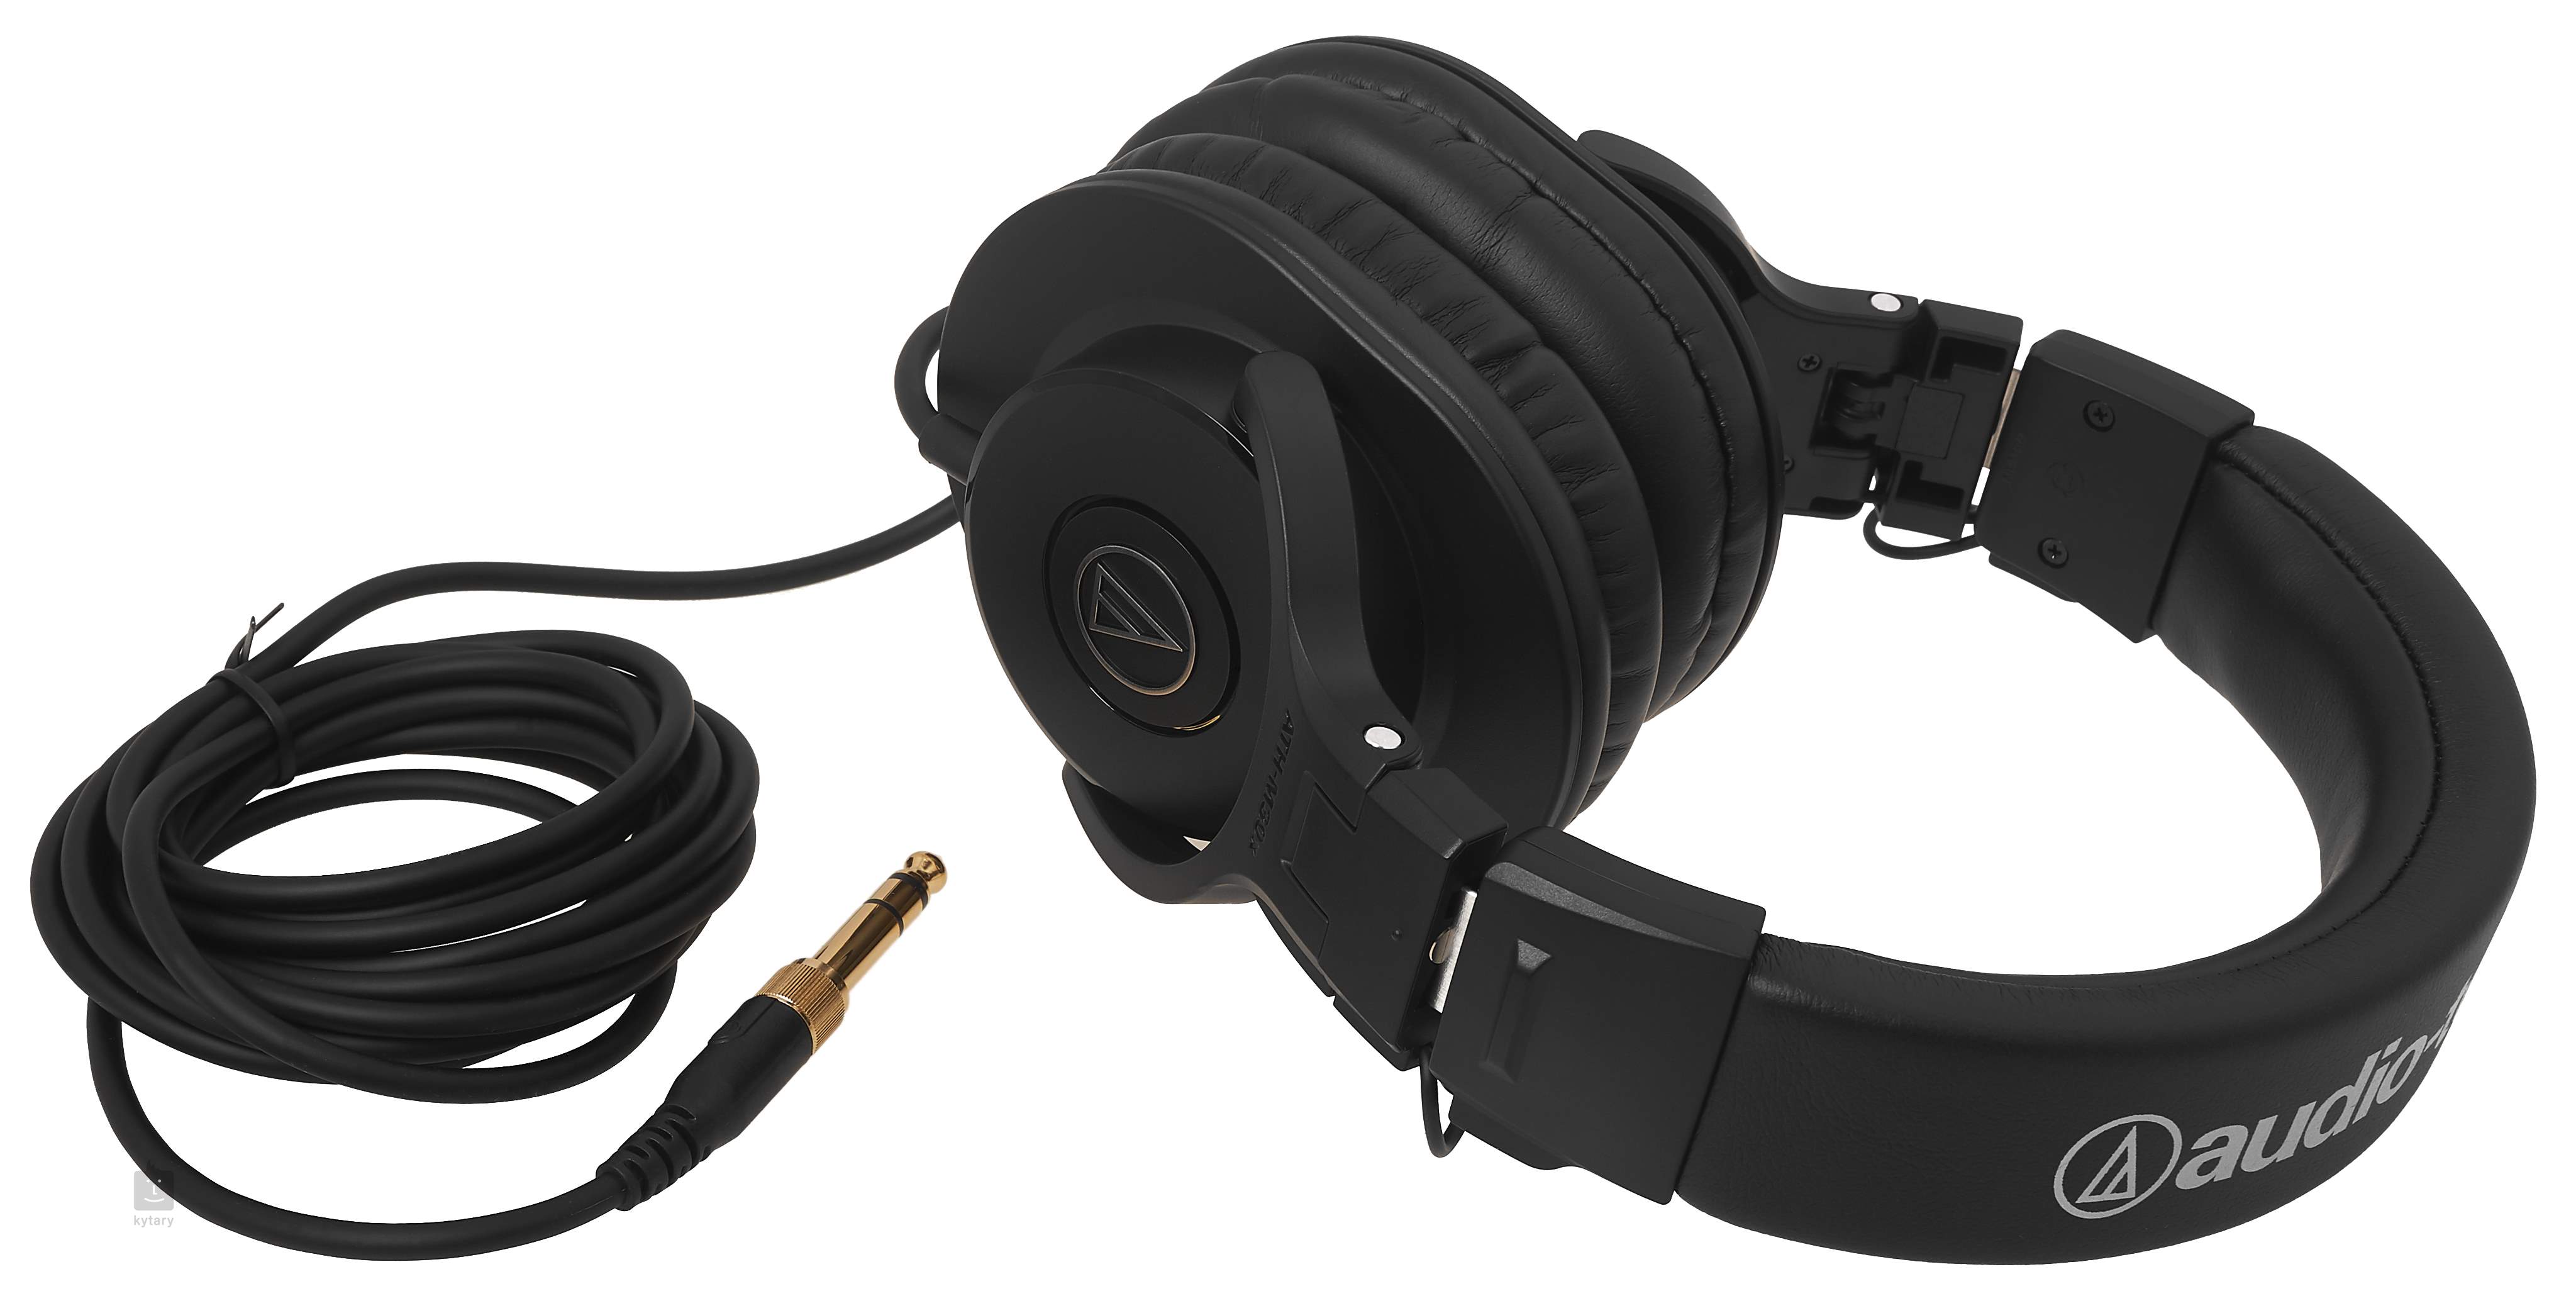 AUDIO-TECHNICA ATH-M30x Studio Headphones